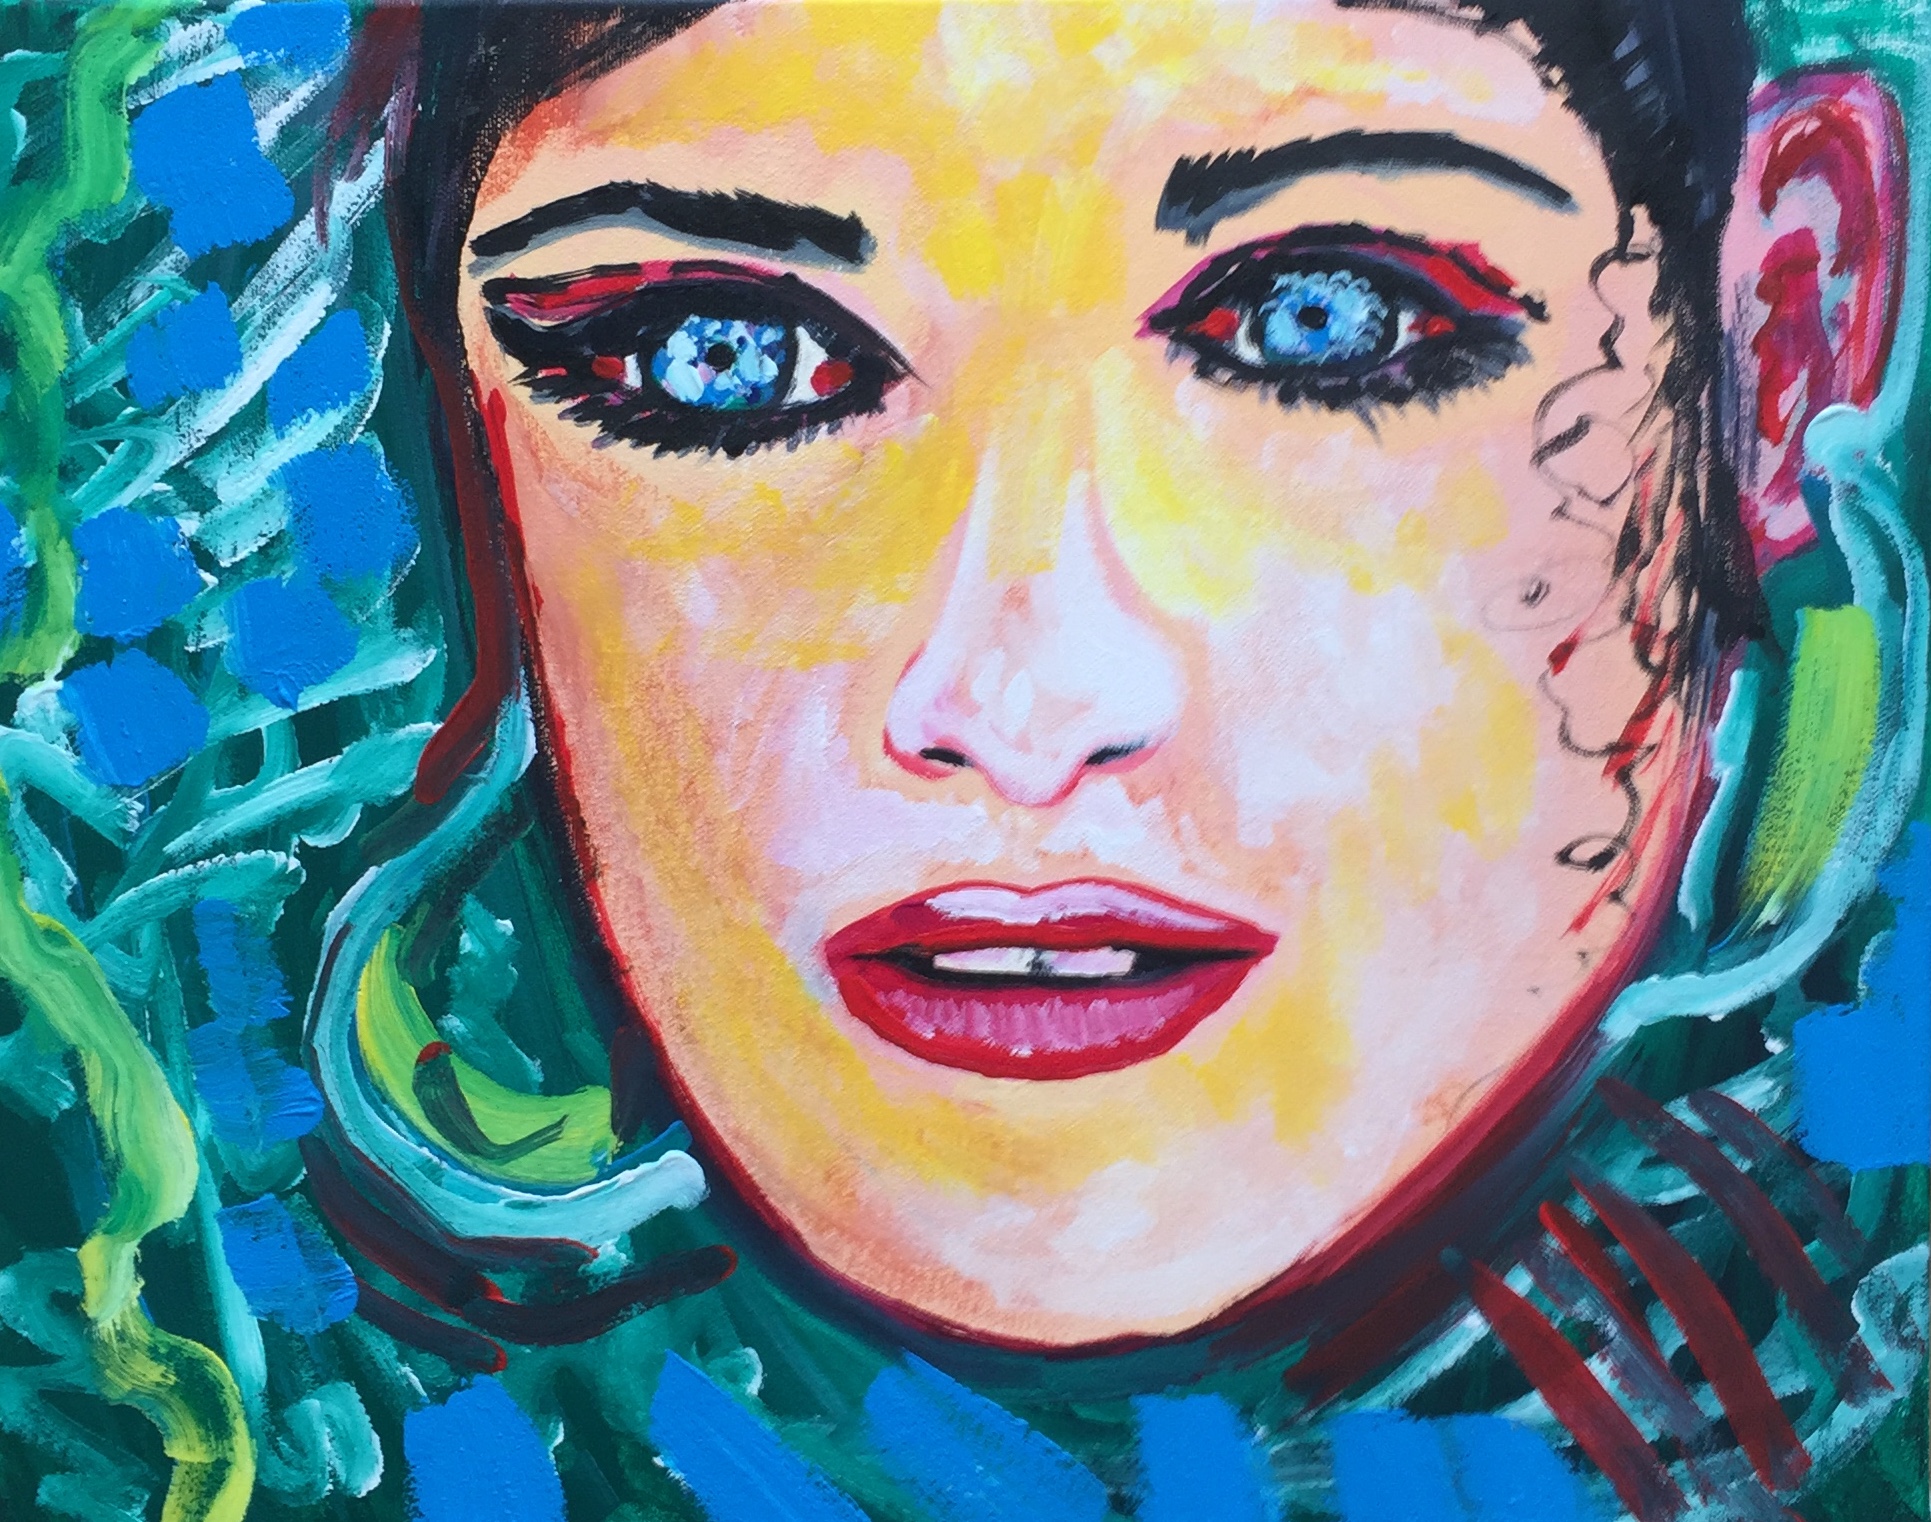 Ocean girl blue eyes, acrylic on canvas, cm 40 x cm 50, Occhiobello, 2019